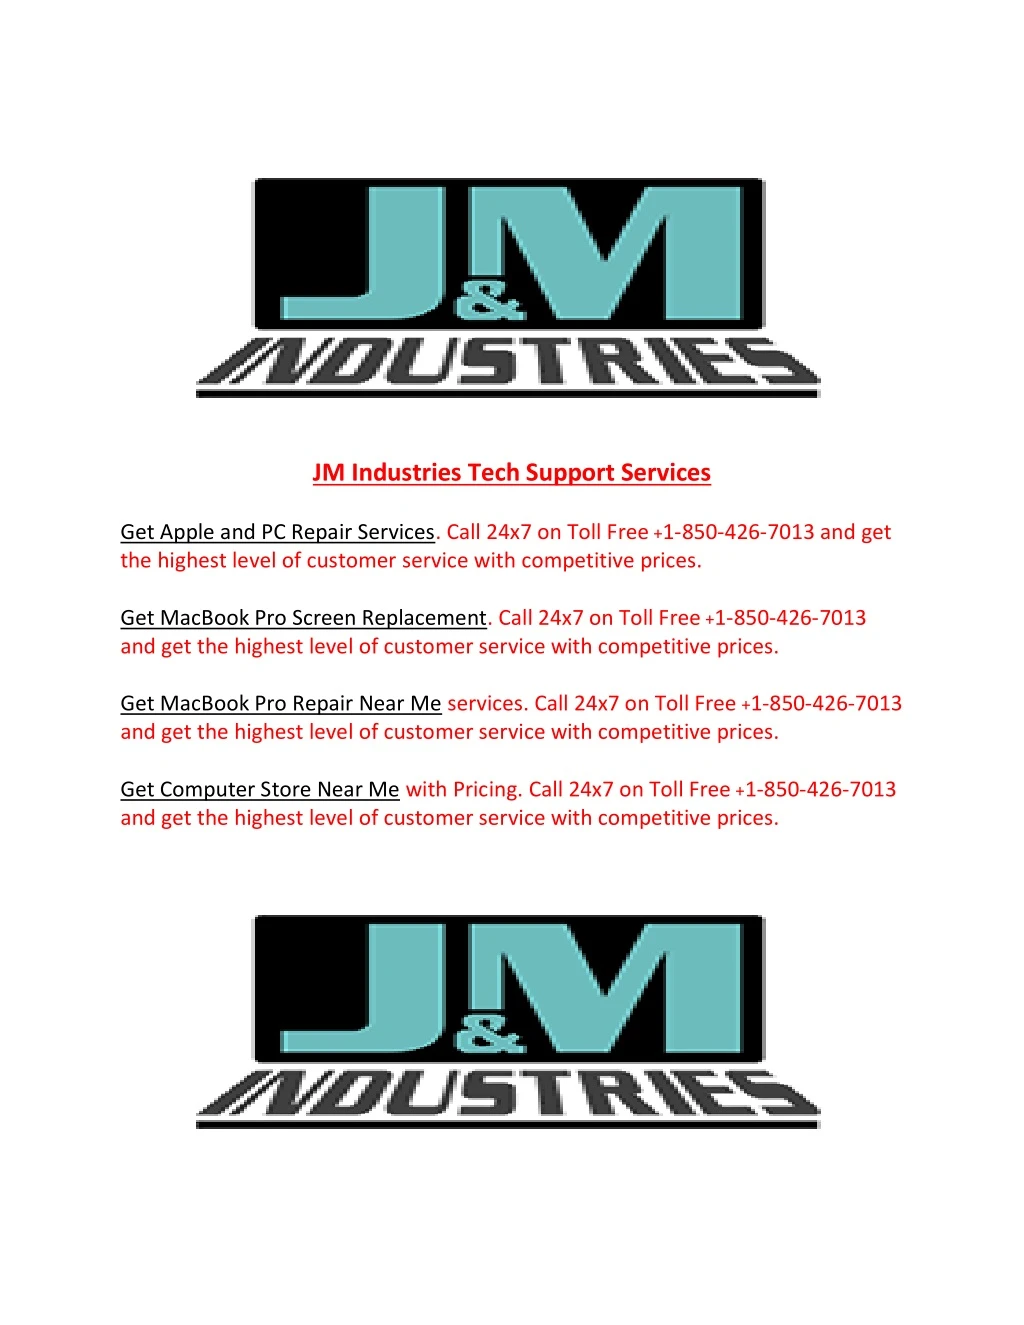 jm industries tech support services